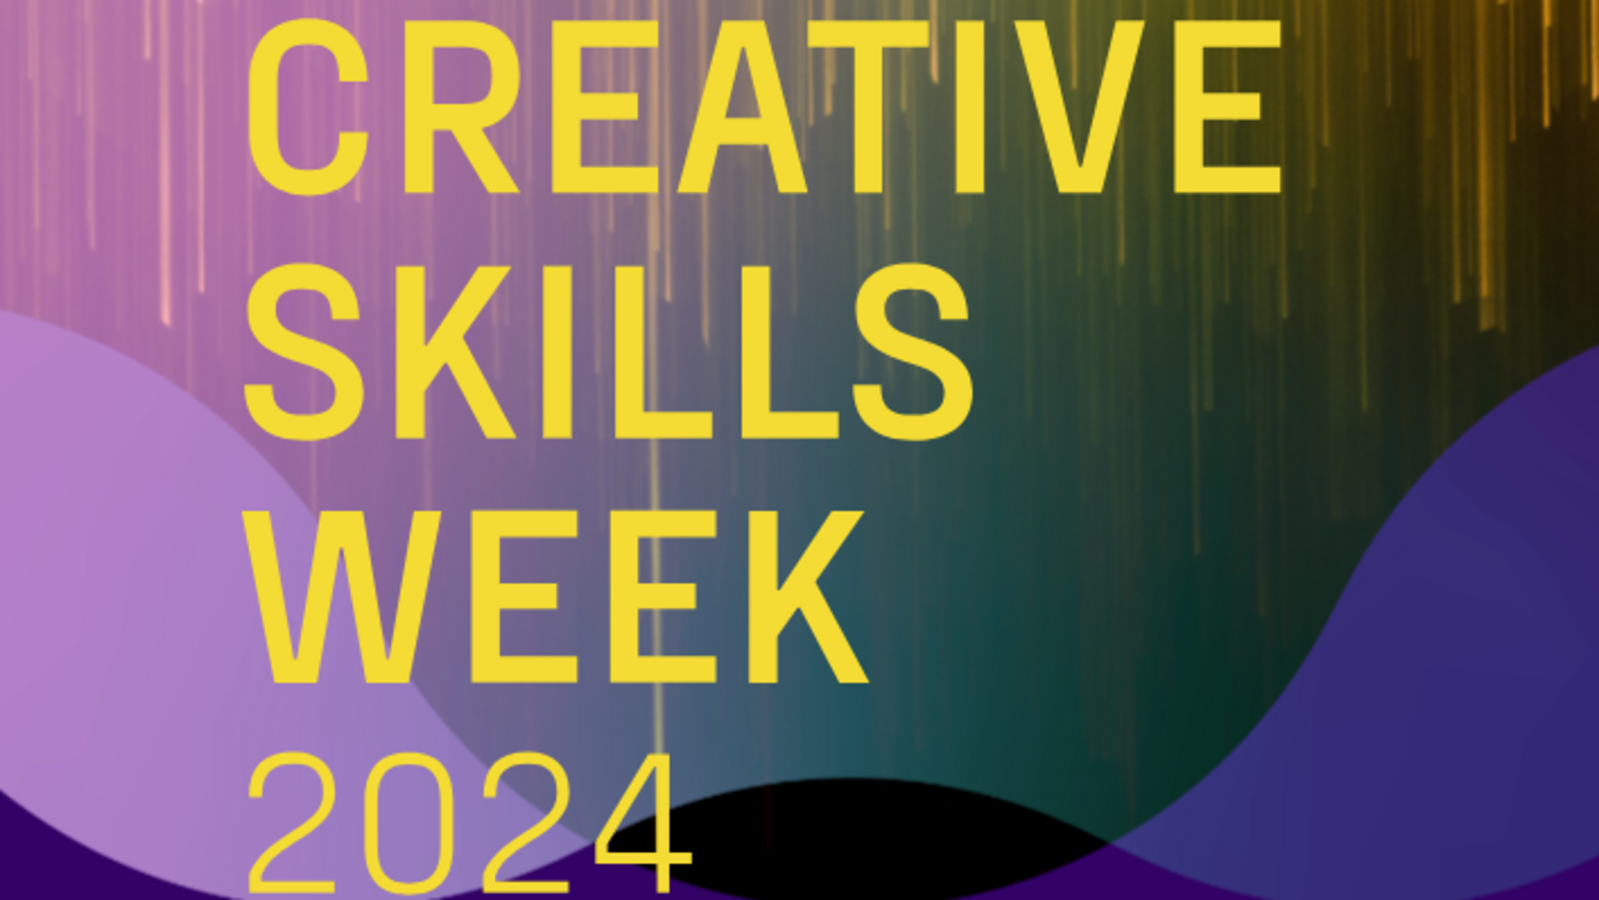 Decorative element: Ad for Creative Skills Week 2024